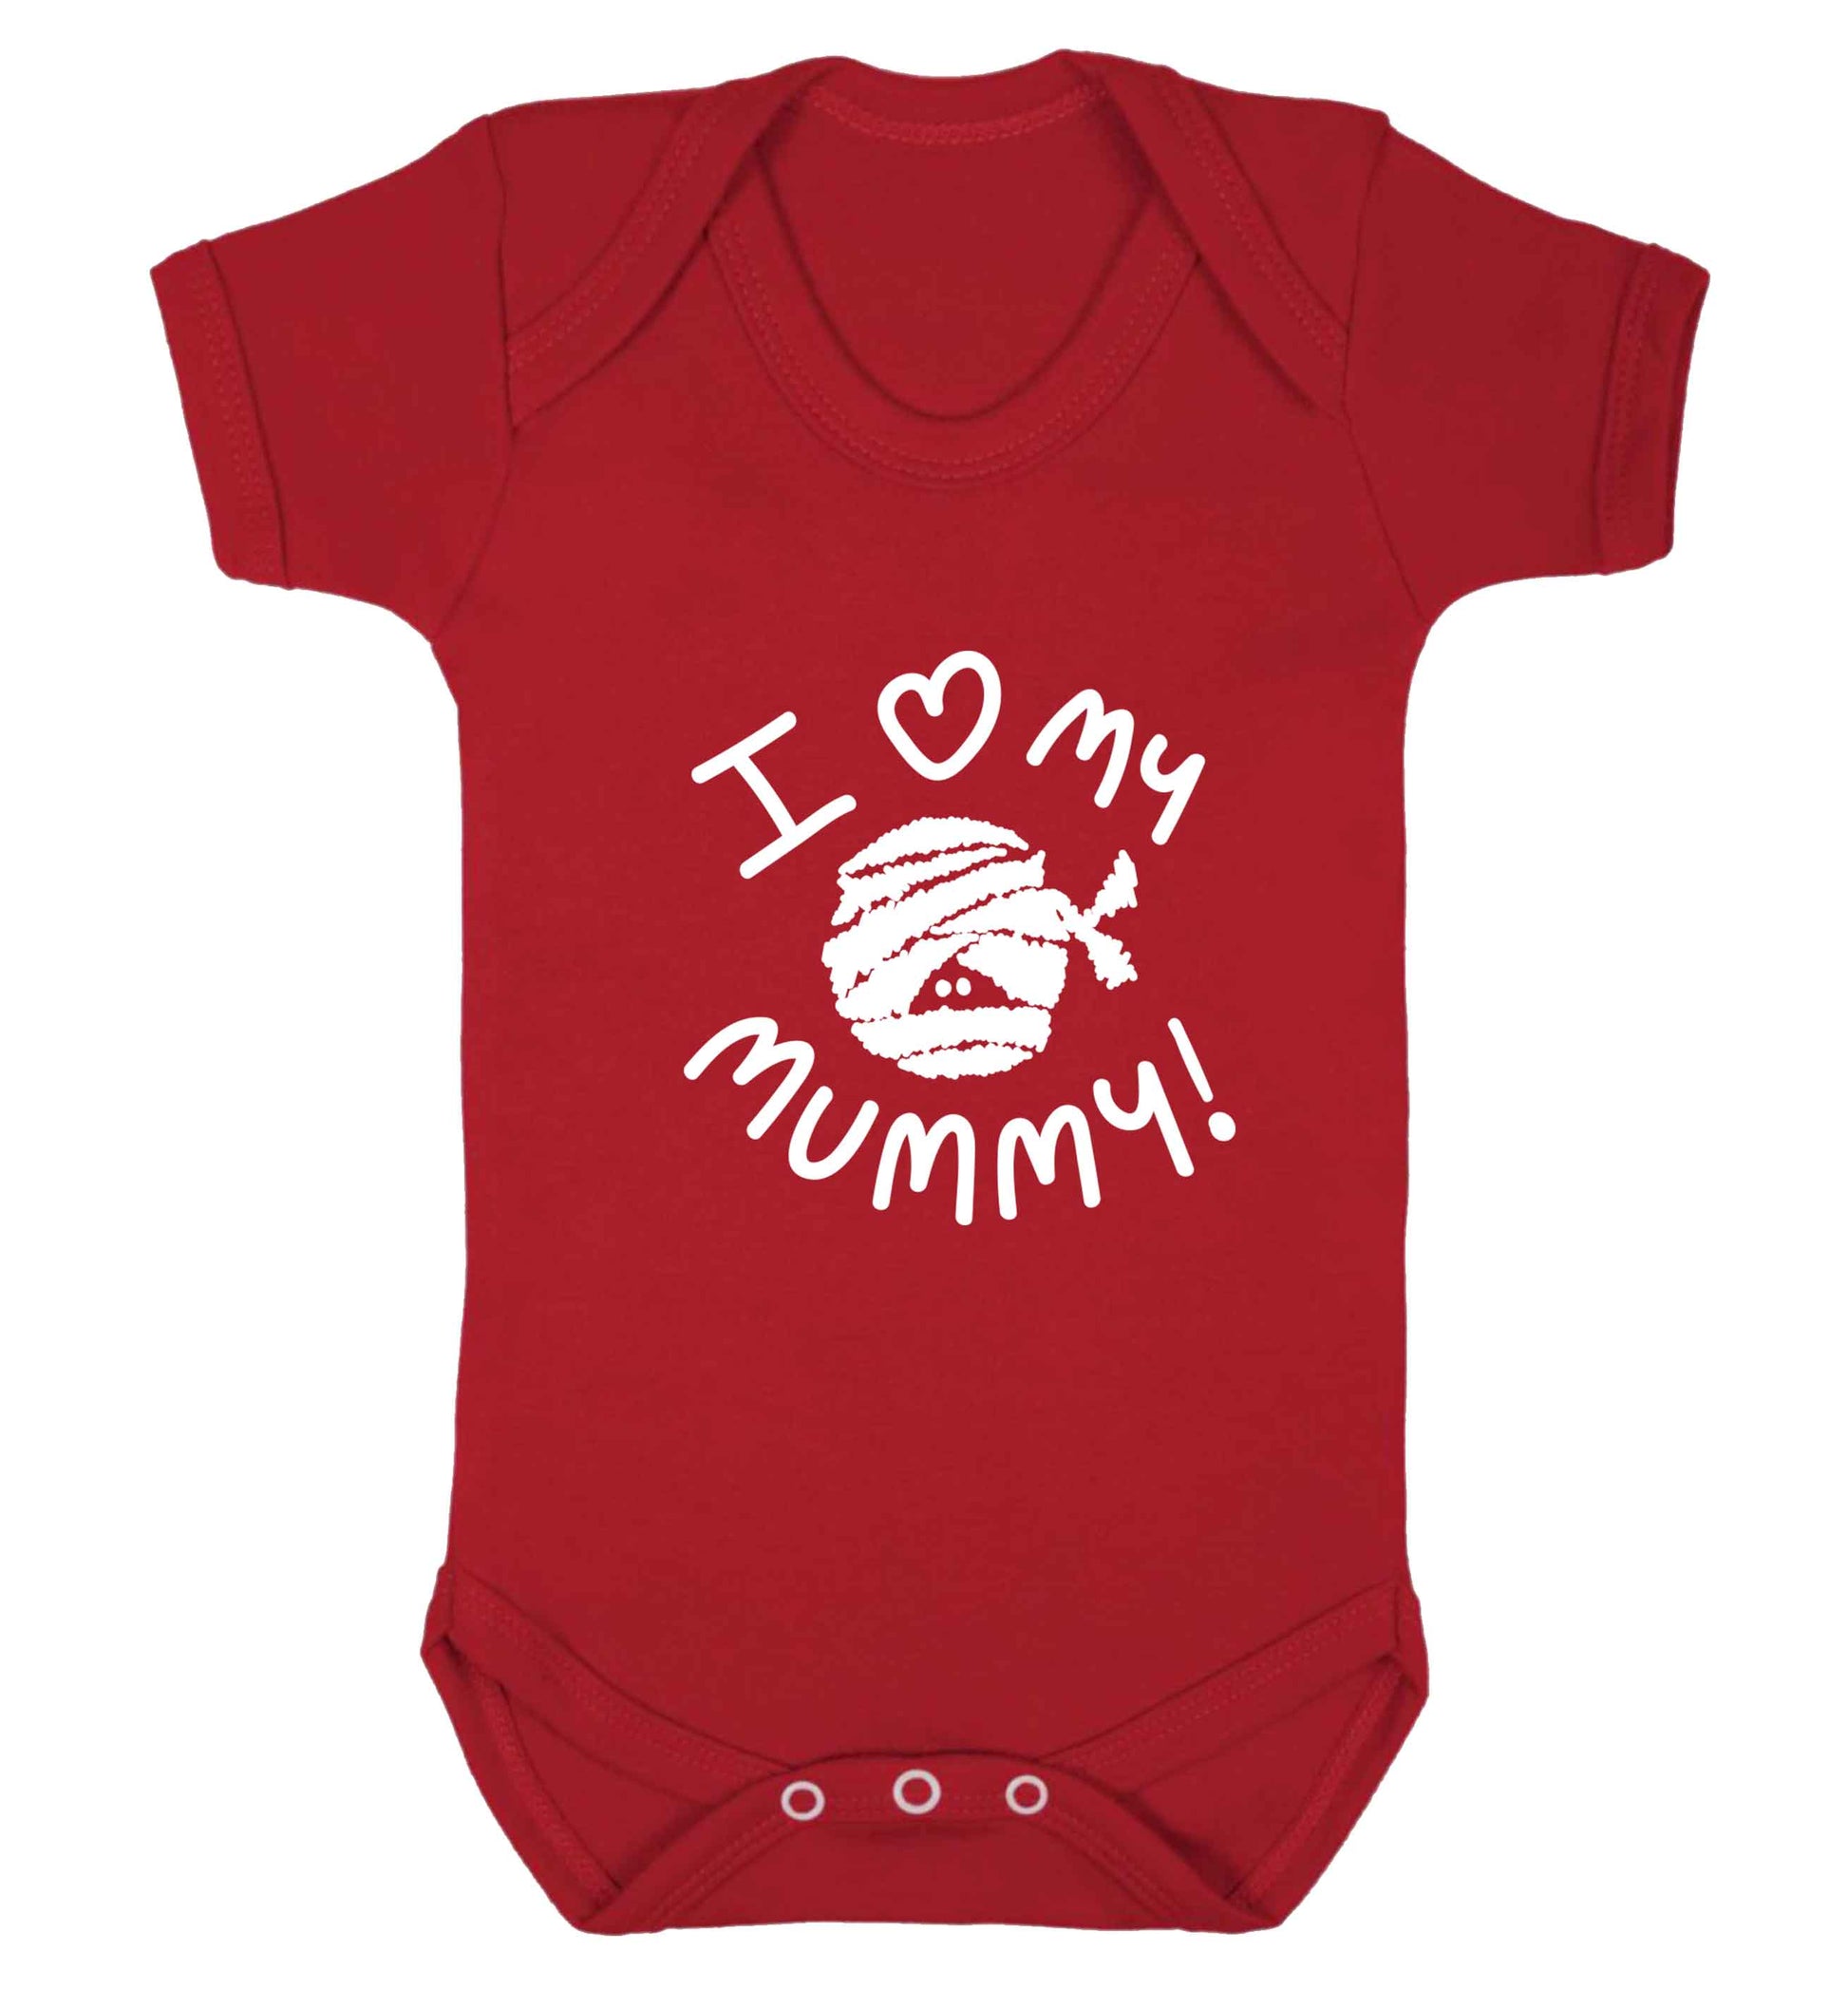 I love my mummy halloween pun baby vest red 18-24 months